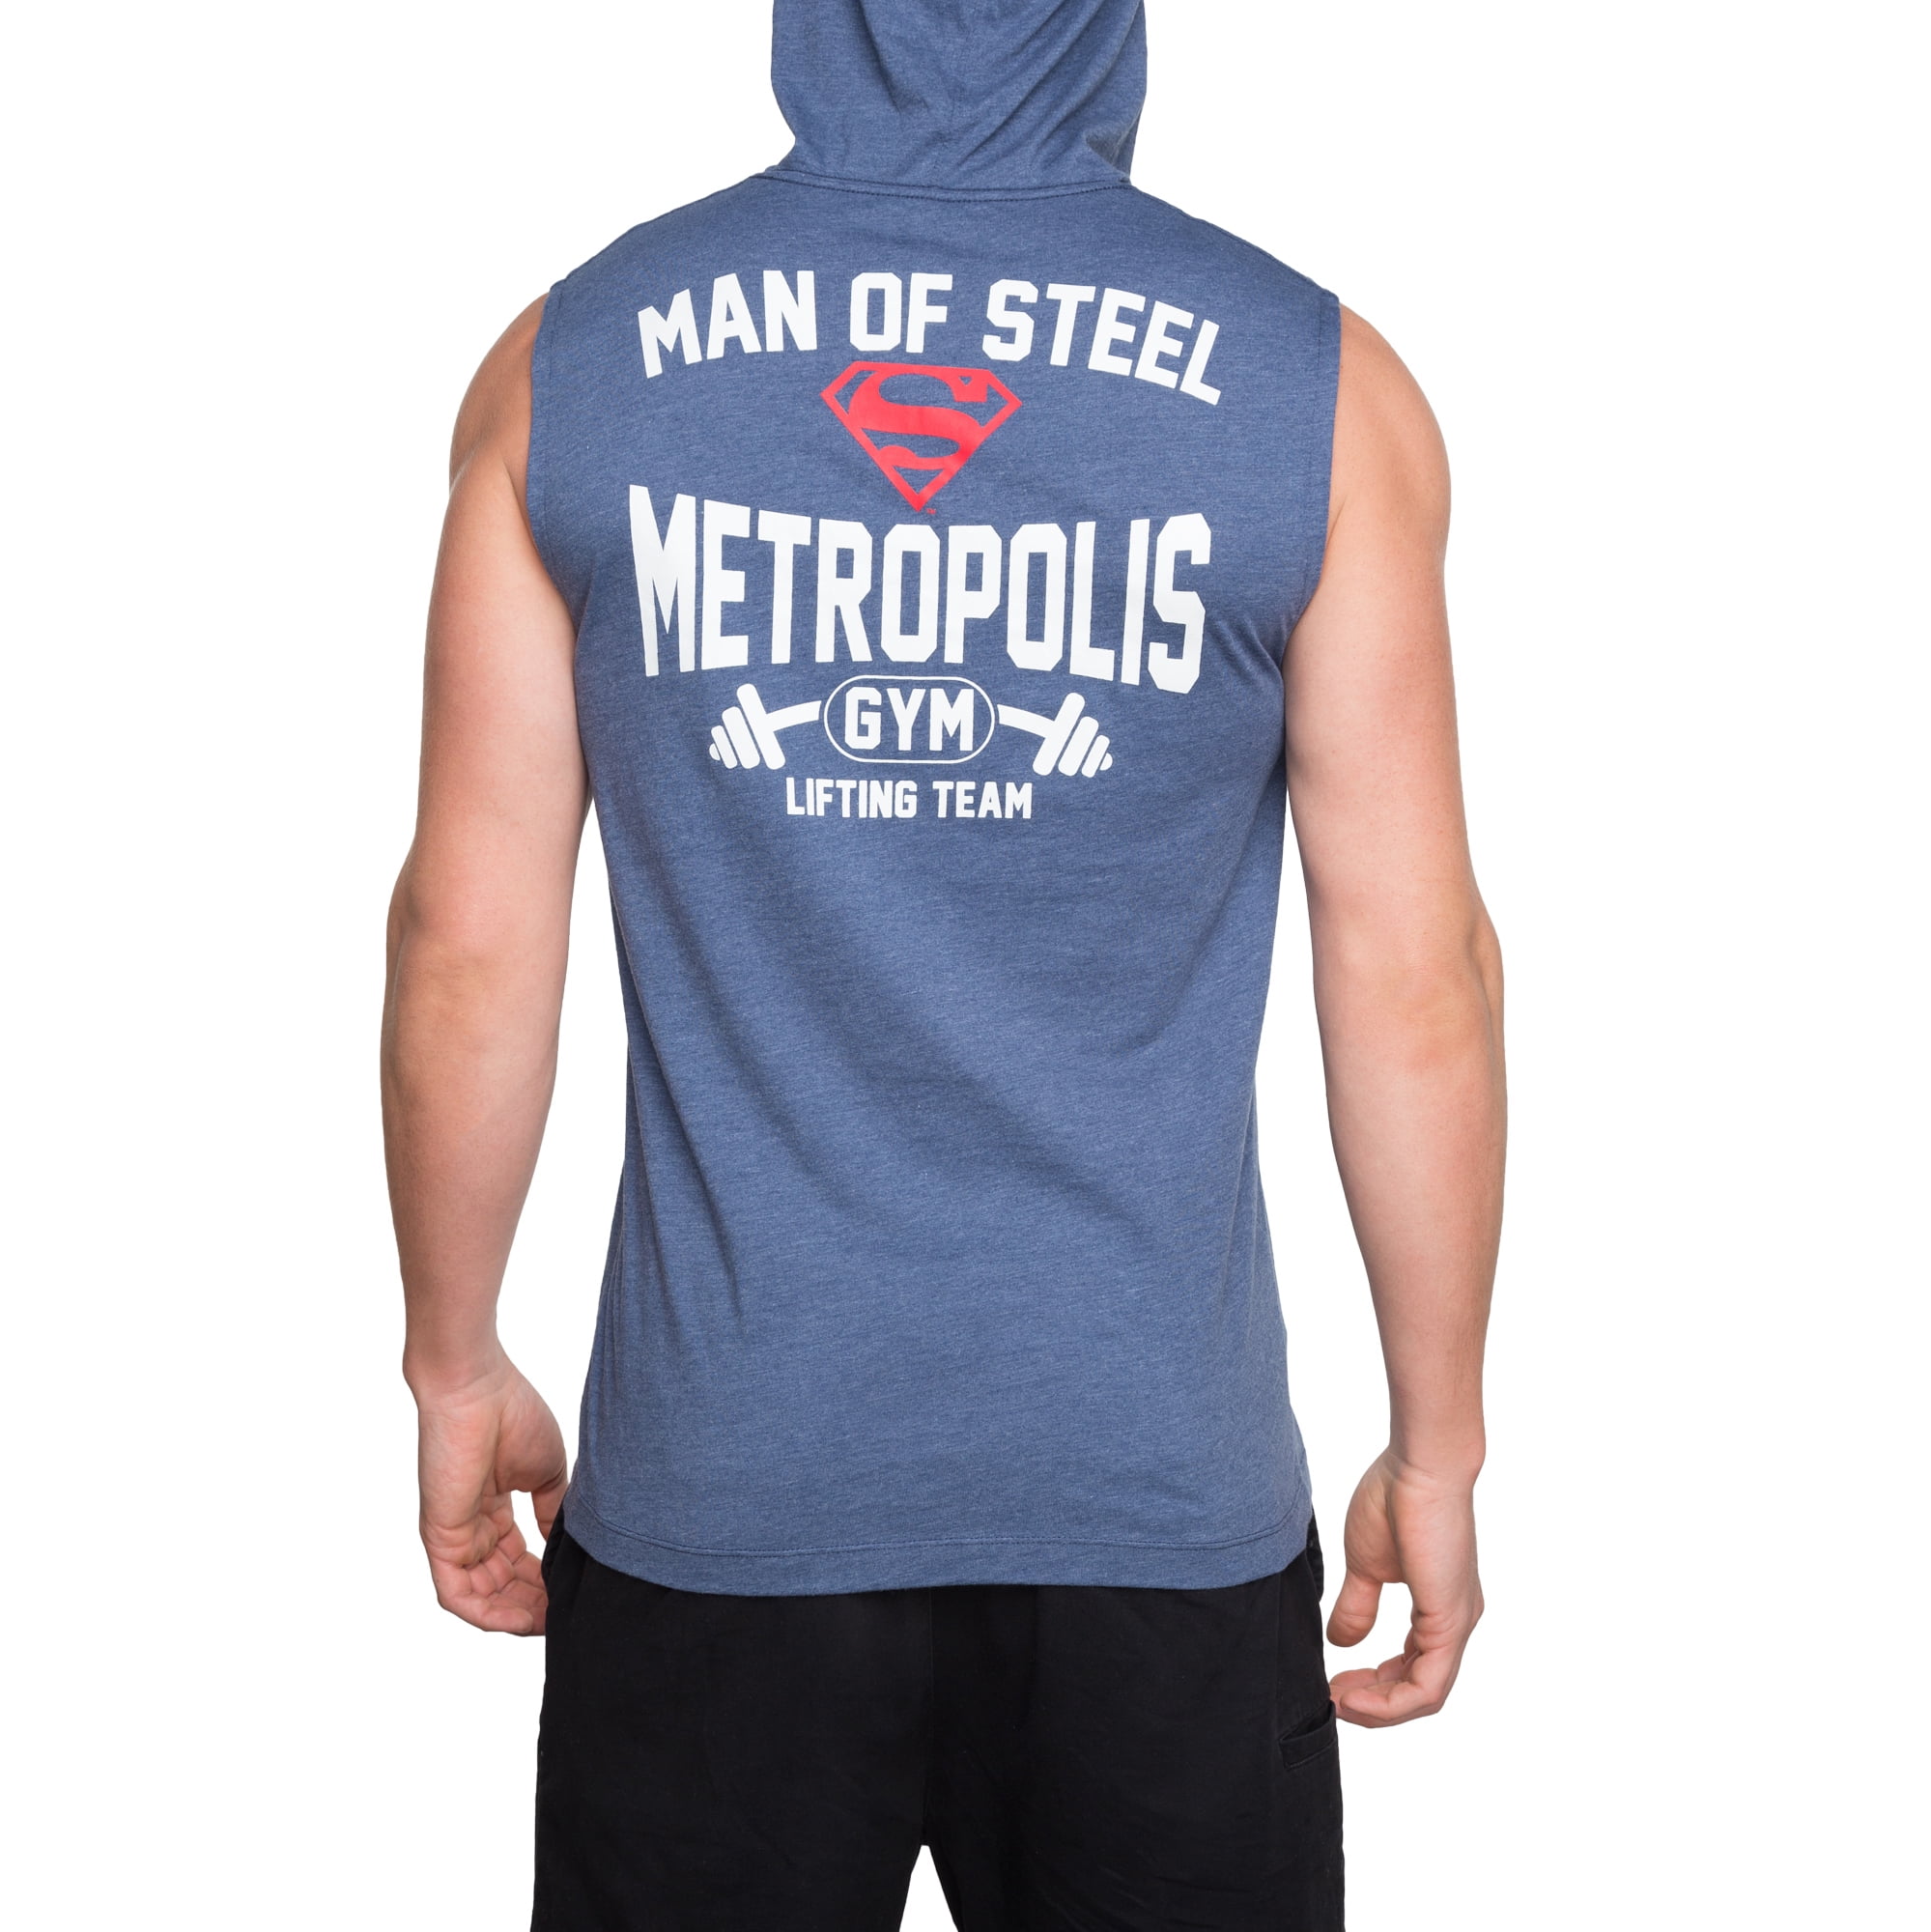 sleeveless superman hoodie